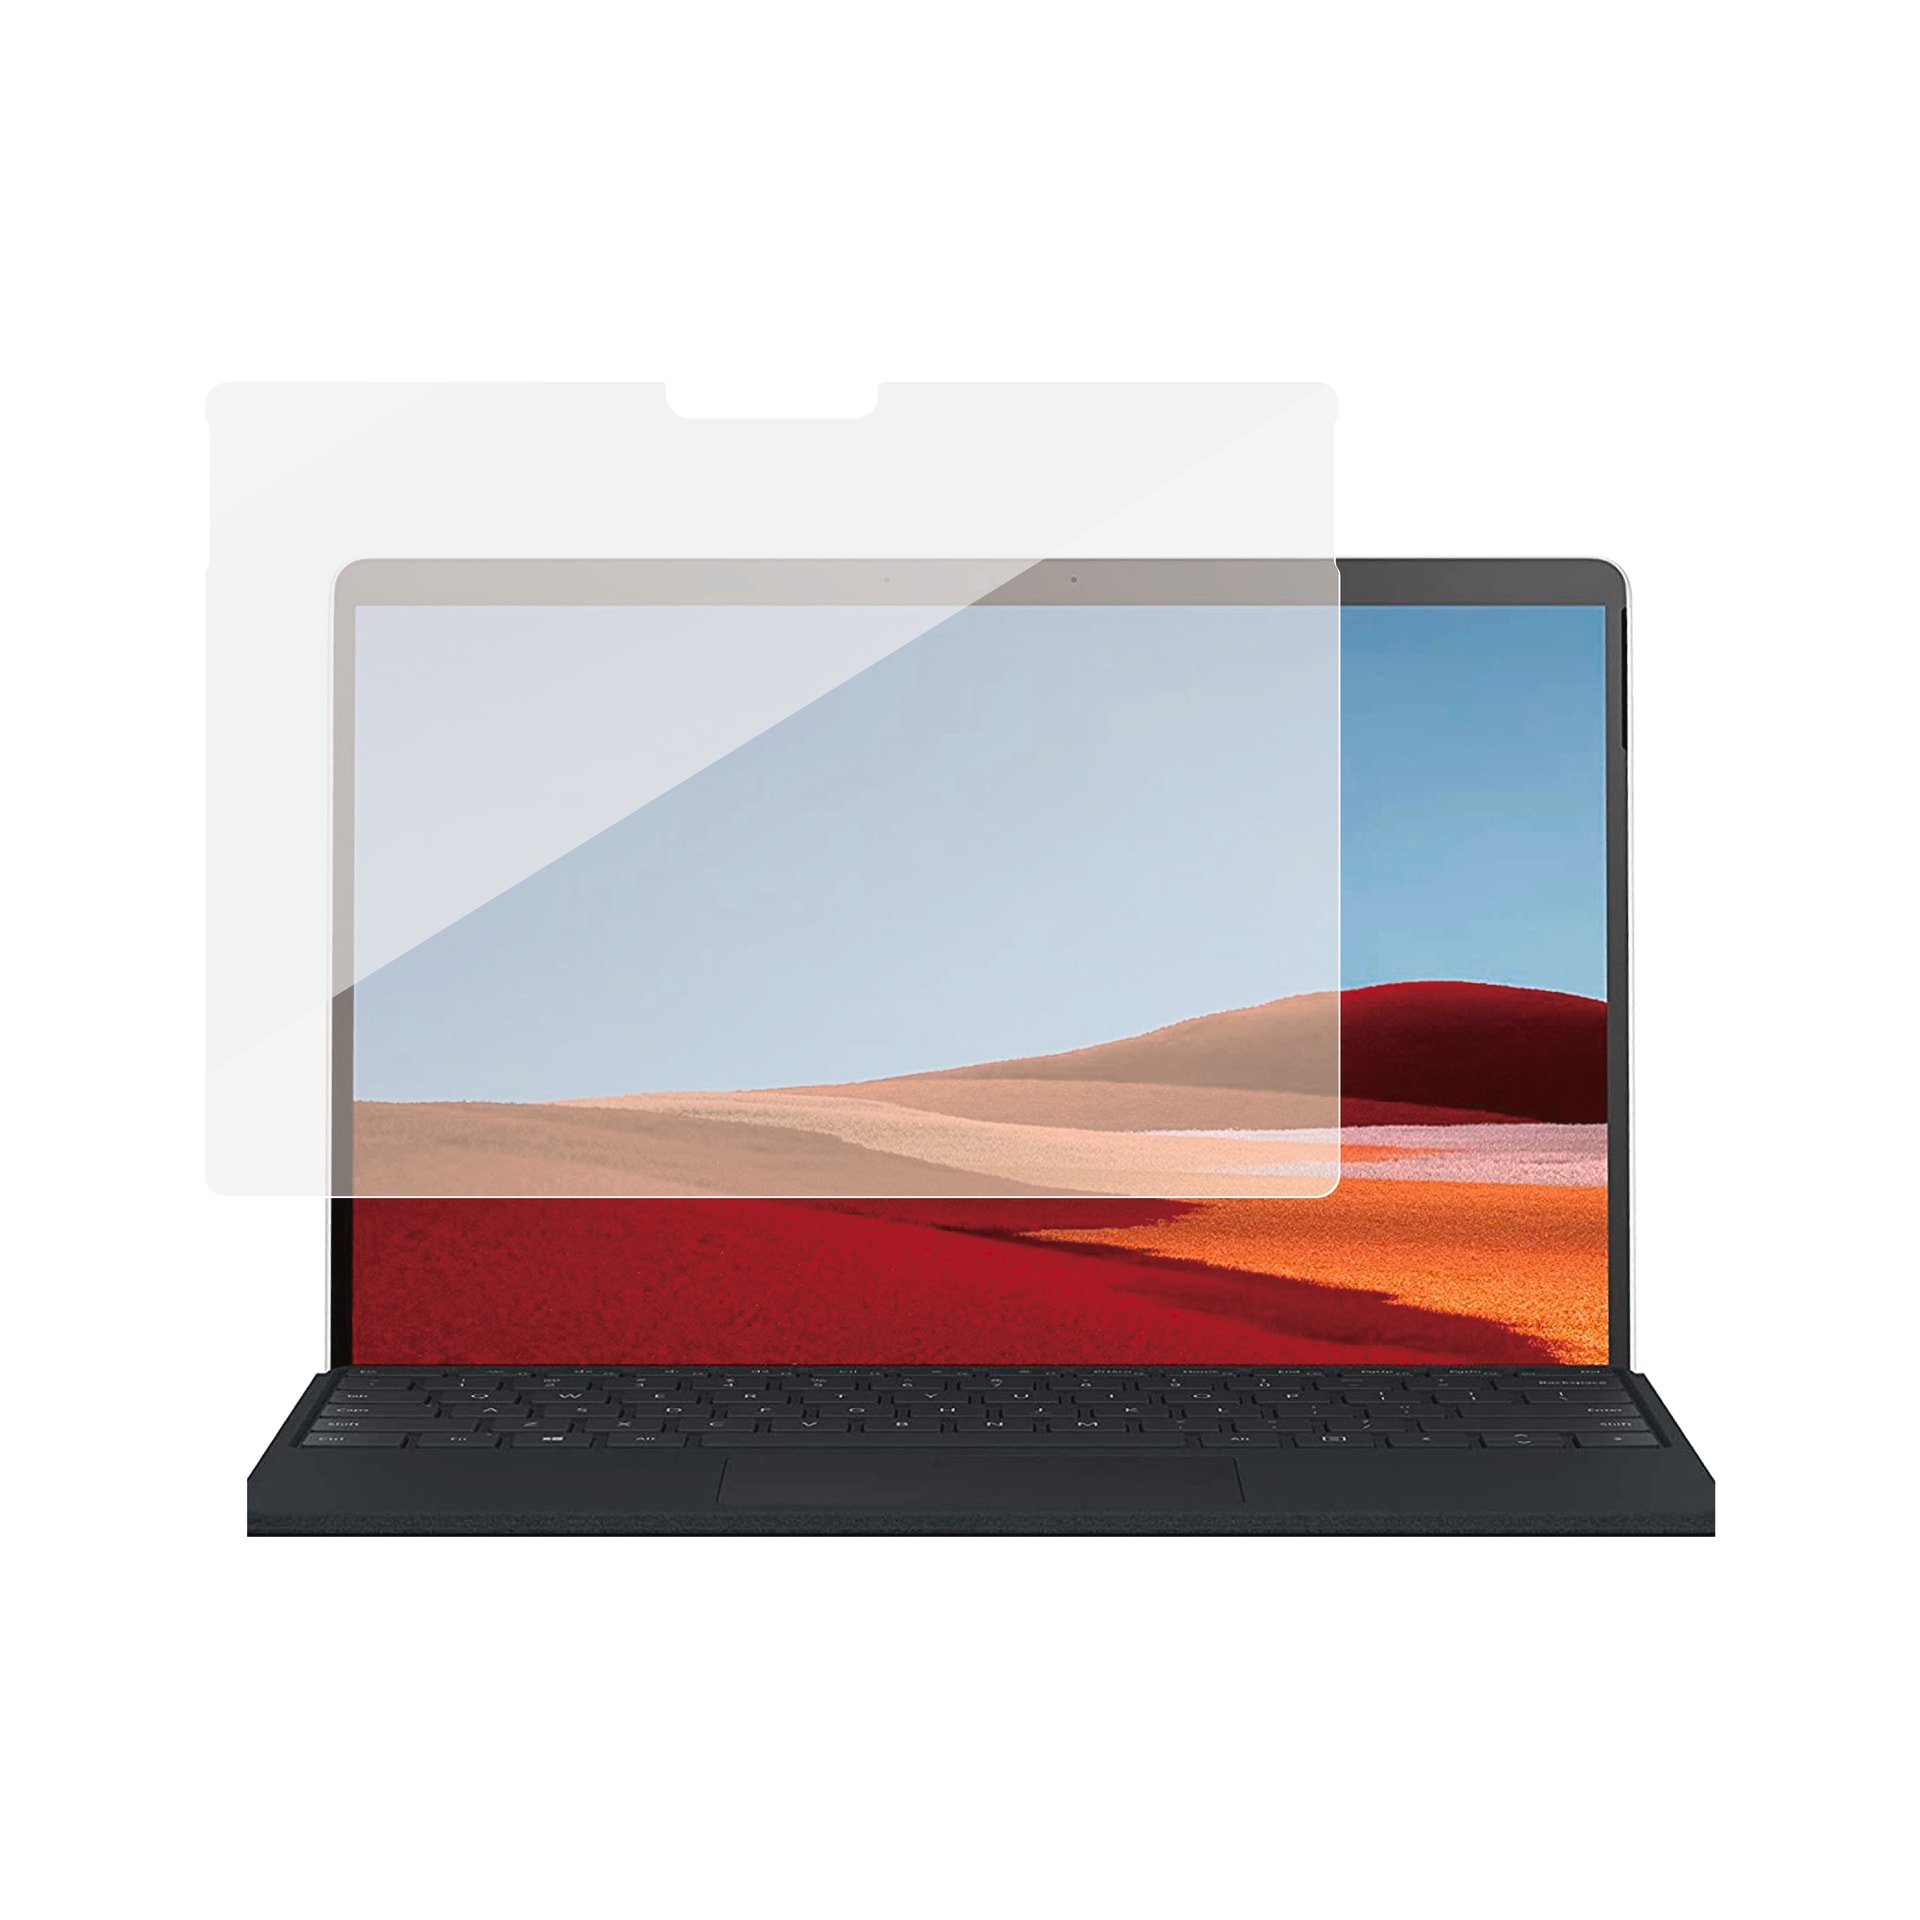 Displayschutzglas »Ultra-Wide Fit Screen Protector«, für Microsoft Surface Laptop Pro X-Microsoft Surface Laptop Pro 9-Microsoft Surface Laptop Pro 8, Displayschutzfolie, Schutzfolie, Bildschirmschutz, kratz- & stoßfest